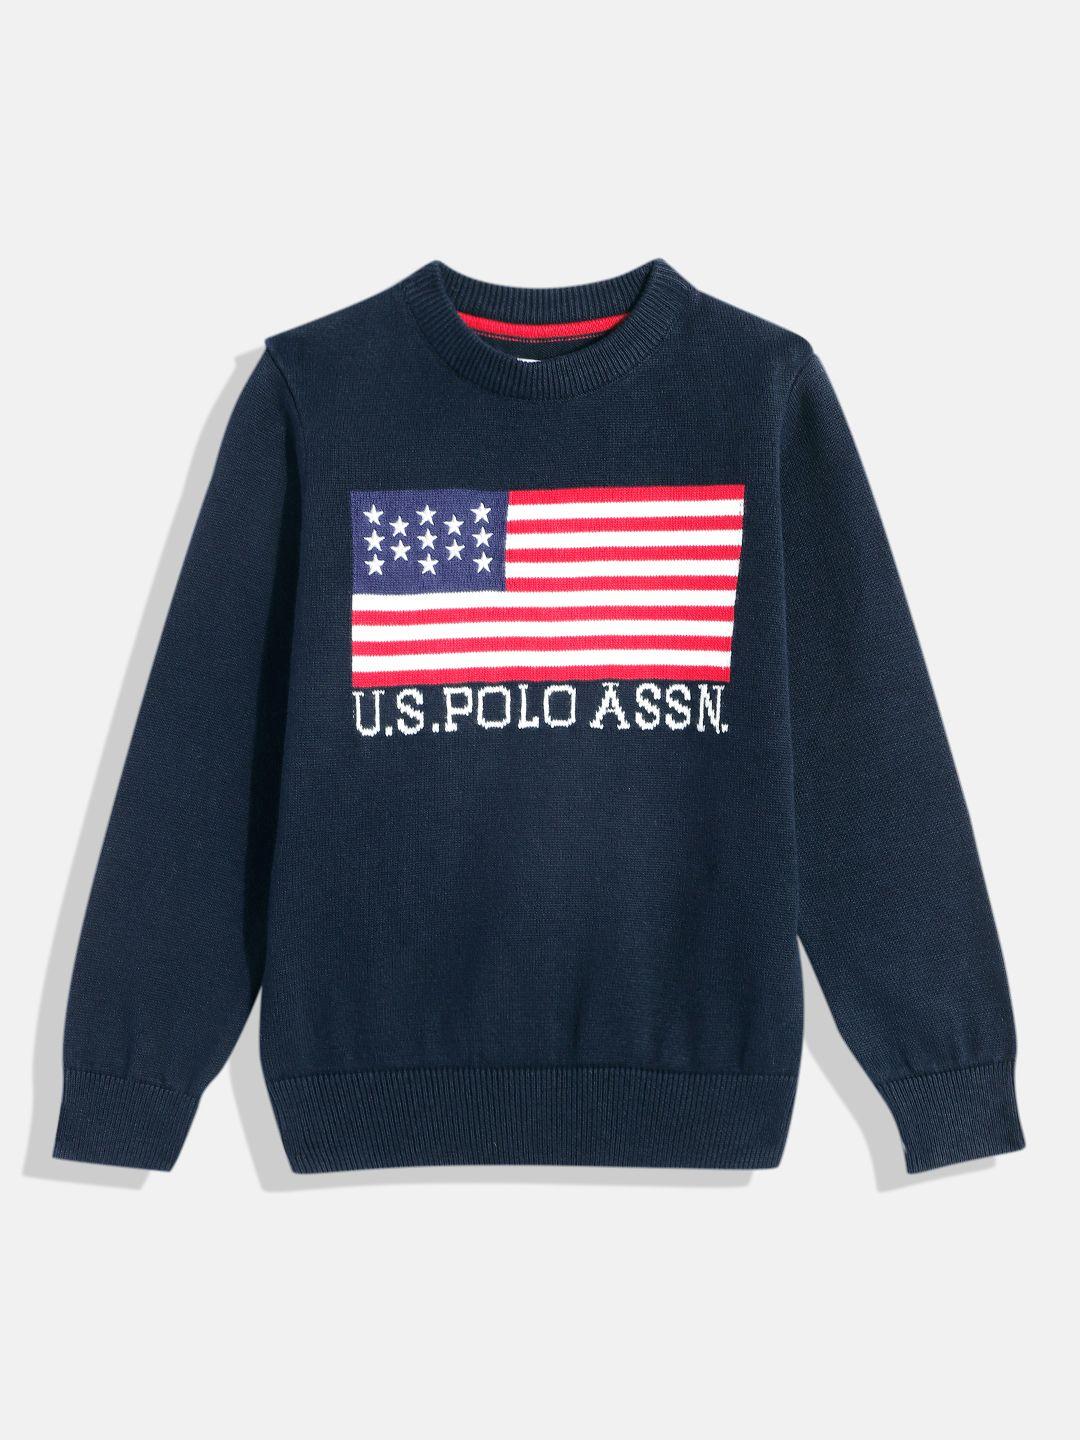 u.s. polo assn. kids boys navy blue brand logo print pure cotton pullover